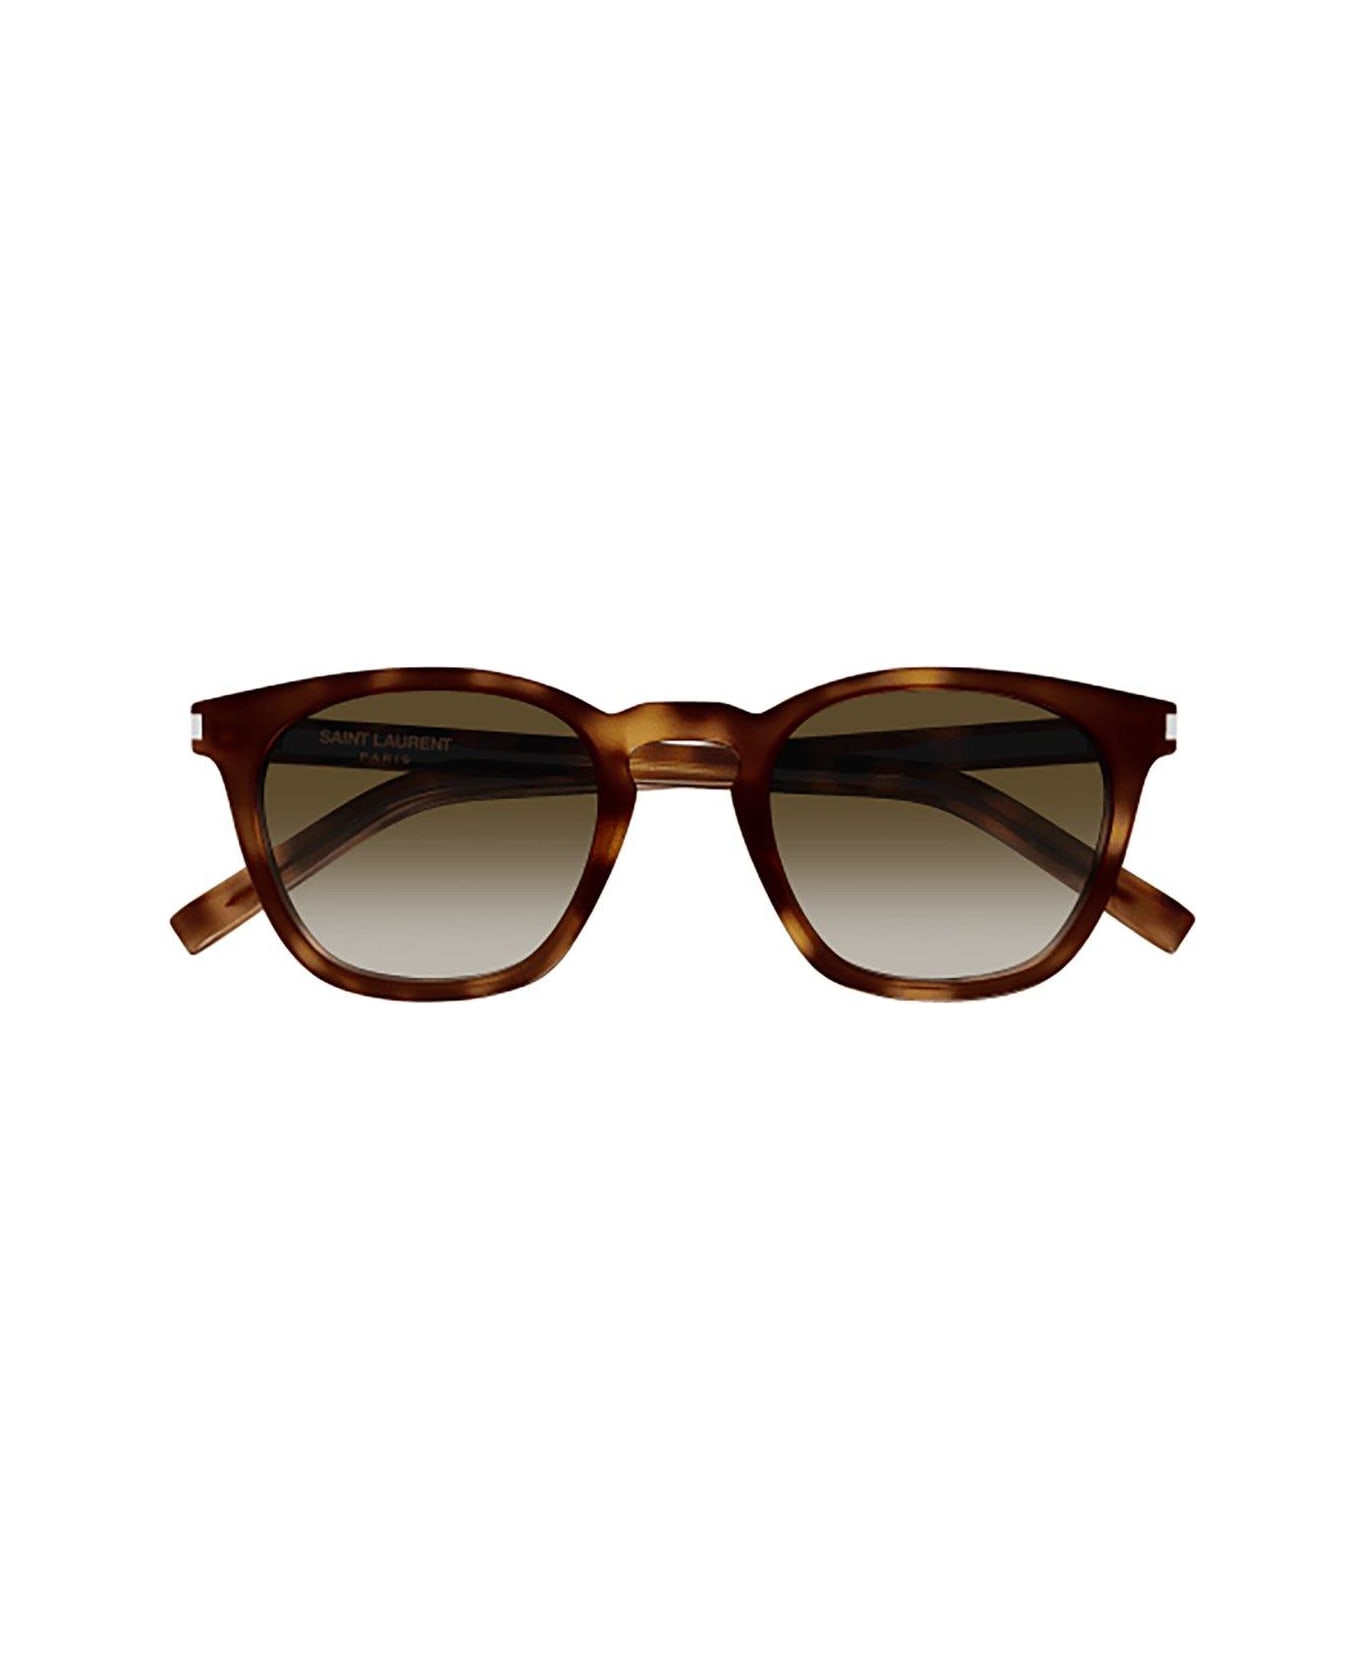 Saint Laurent Eyewear Sl 28 Round Frame Sunglasses - 048 havana havana brown